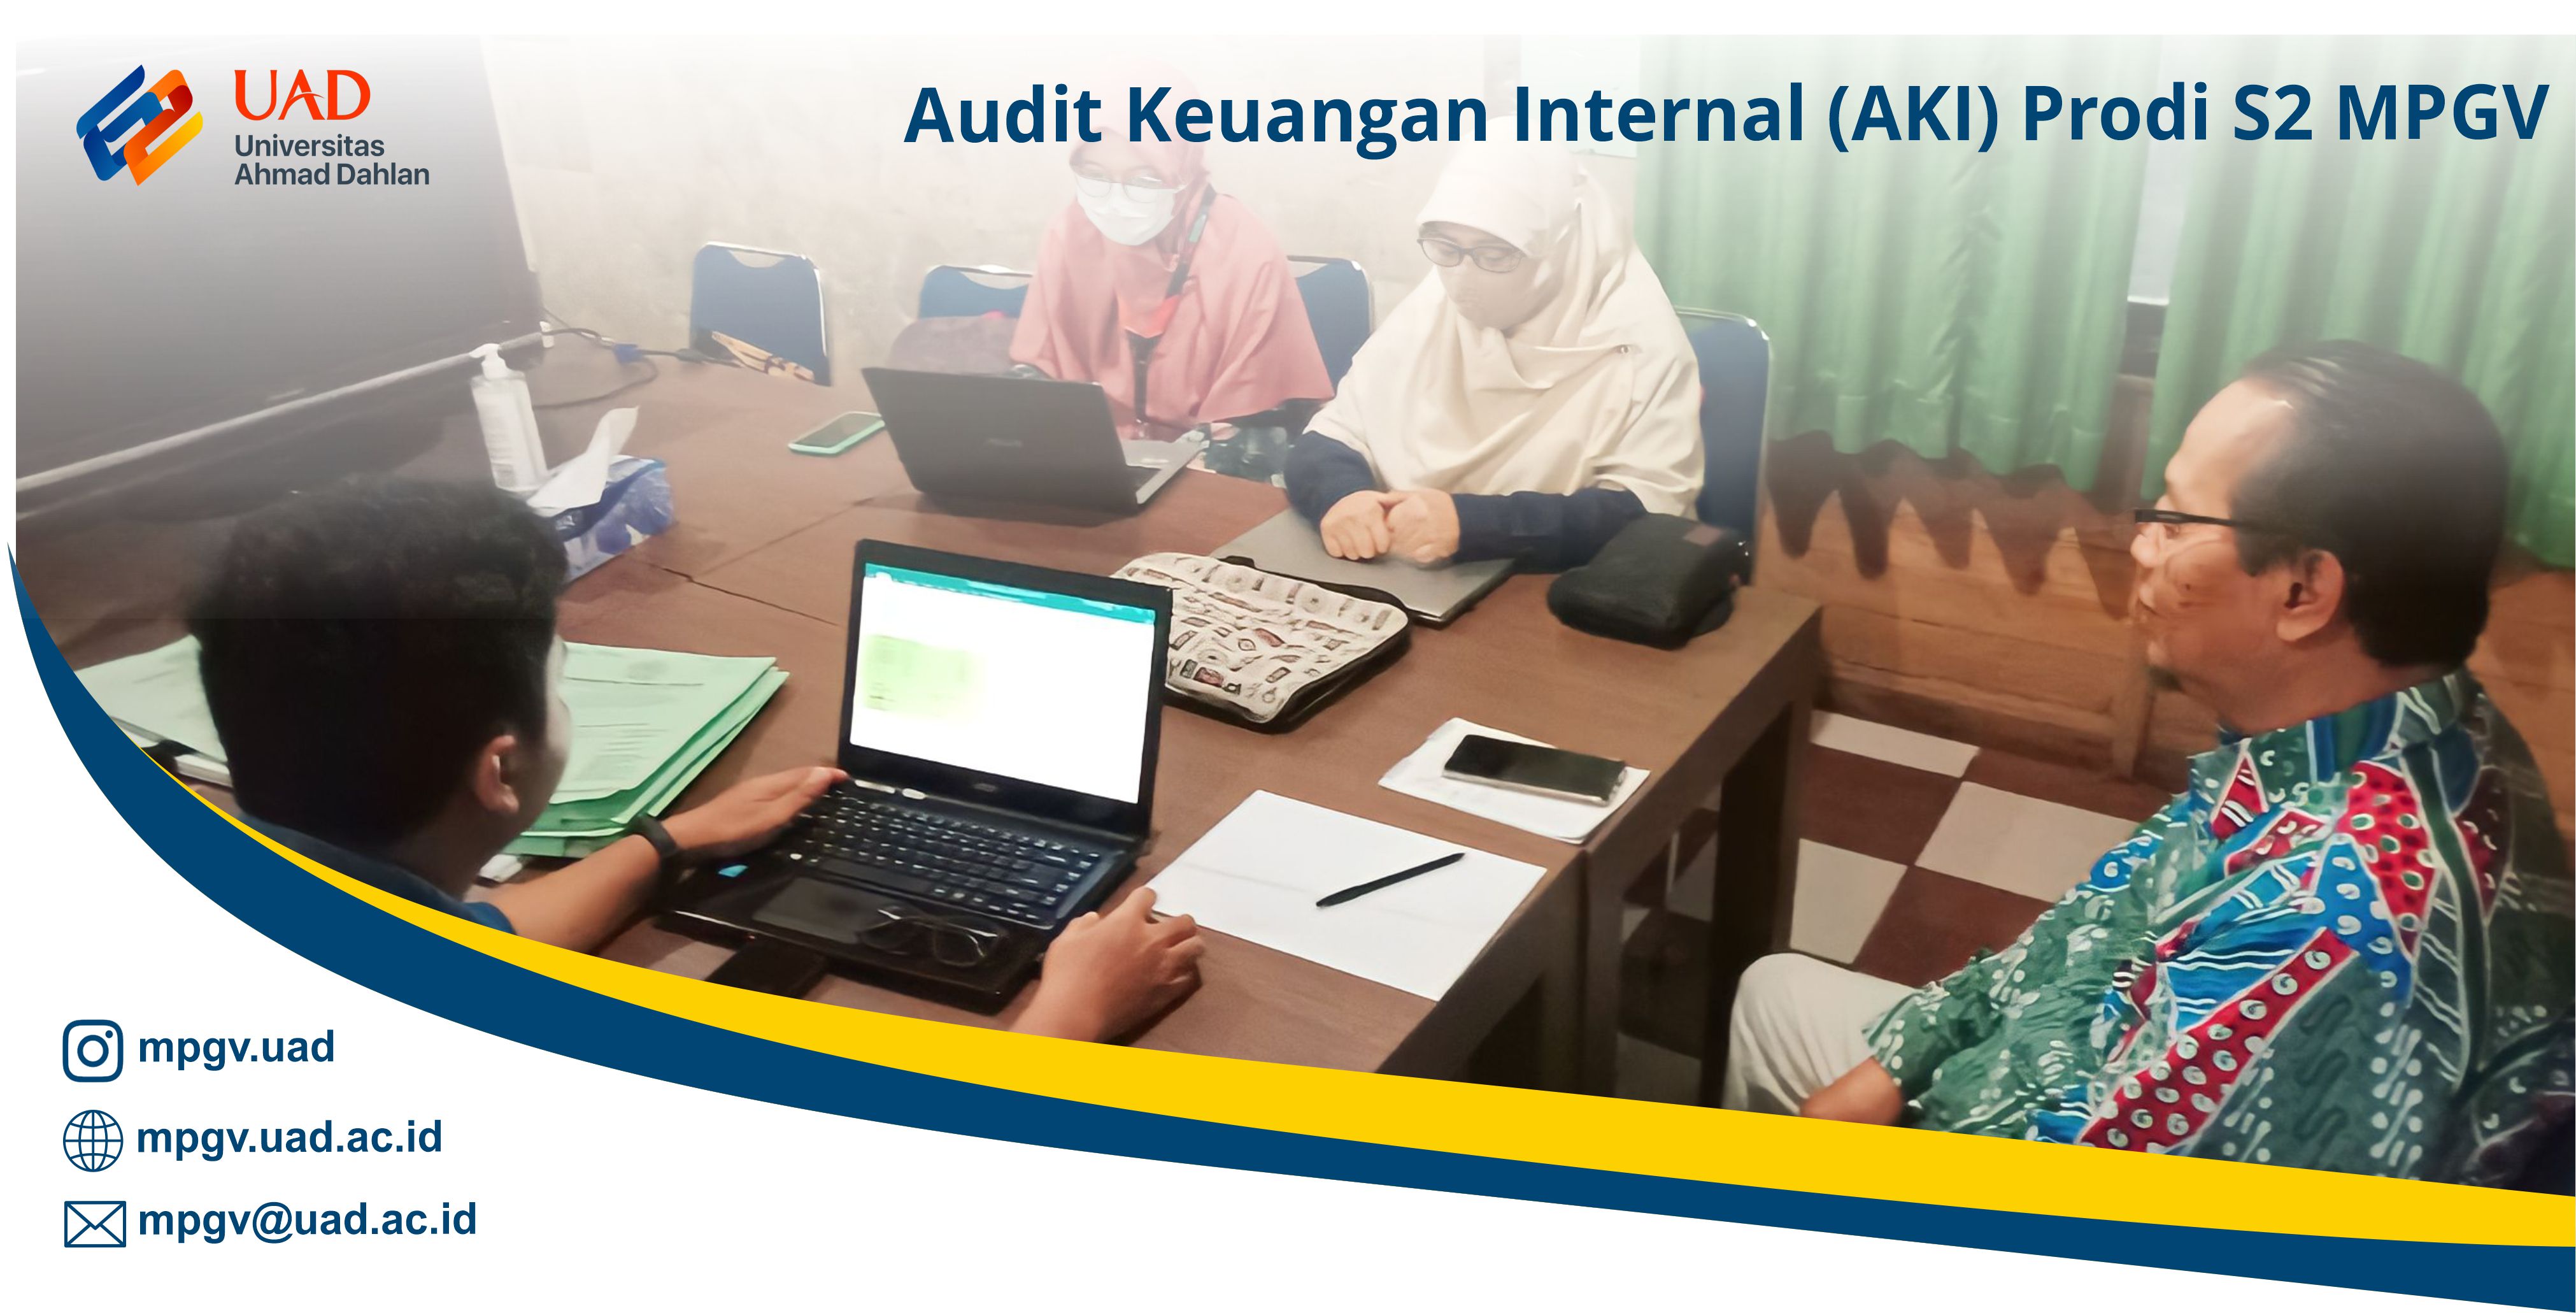 Audit Keuangan Internal (AKI) Prodi S2 MPGV UAD